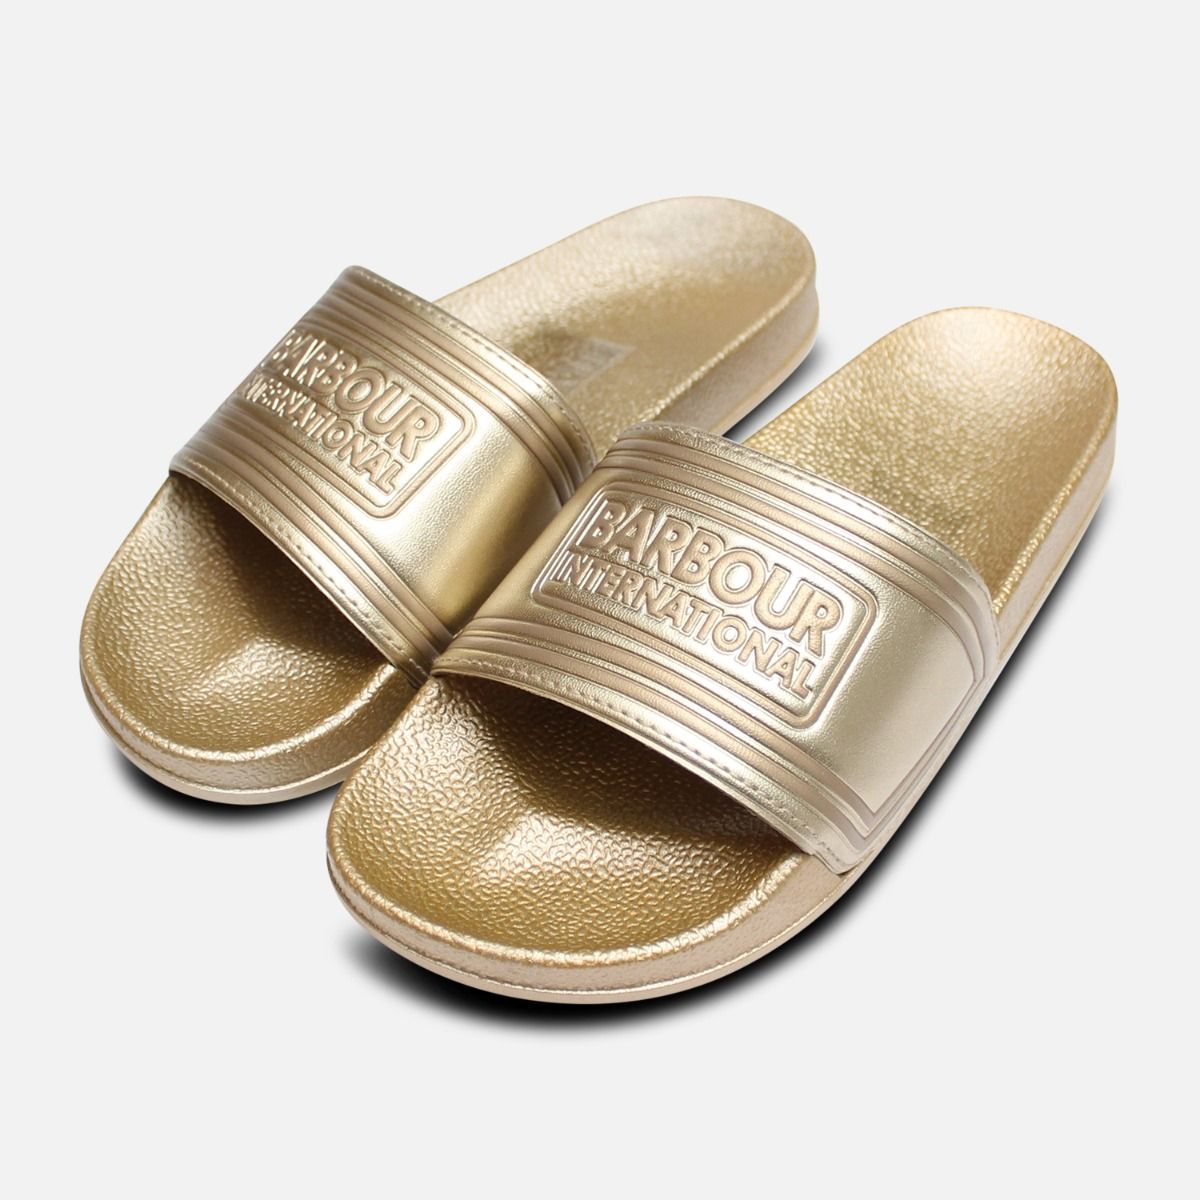 barbour international slippers